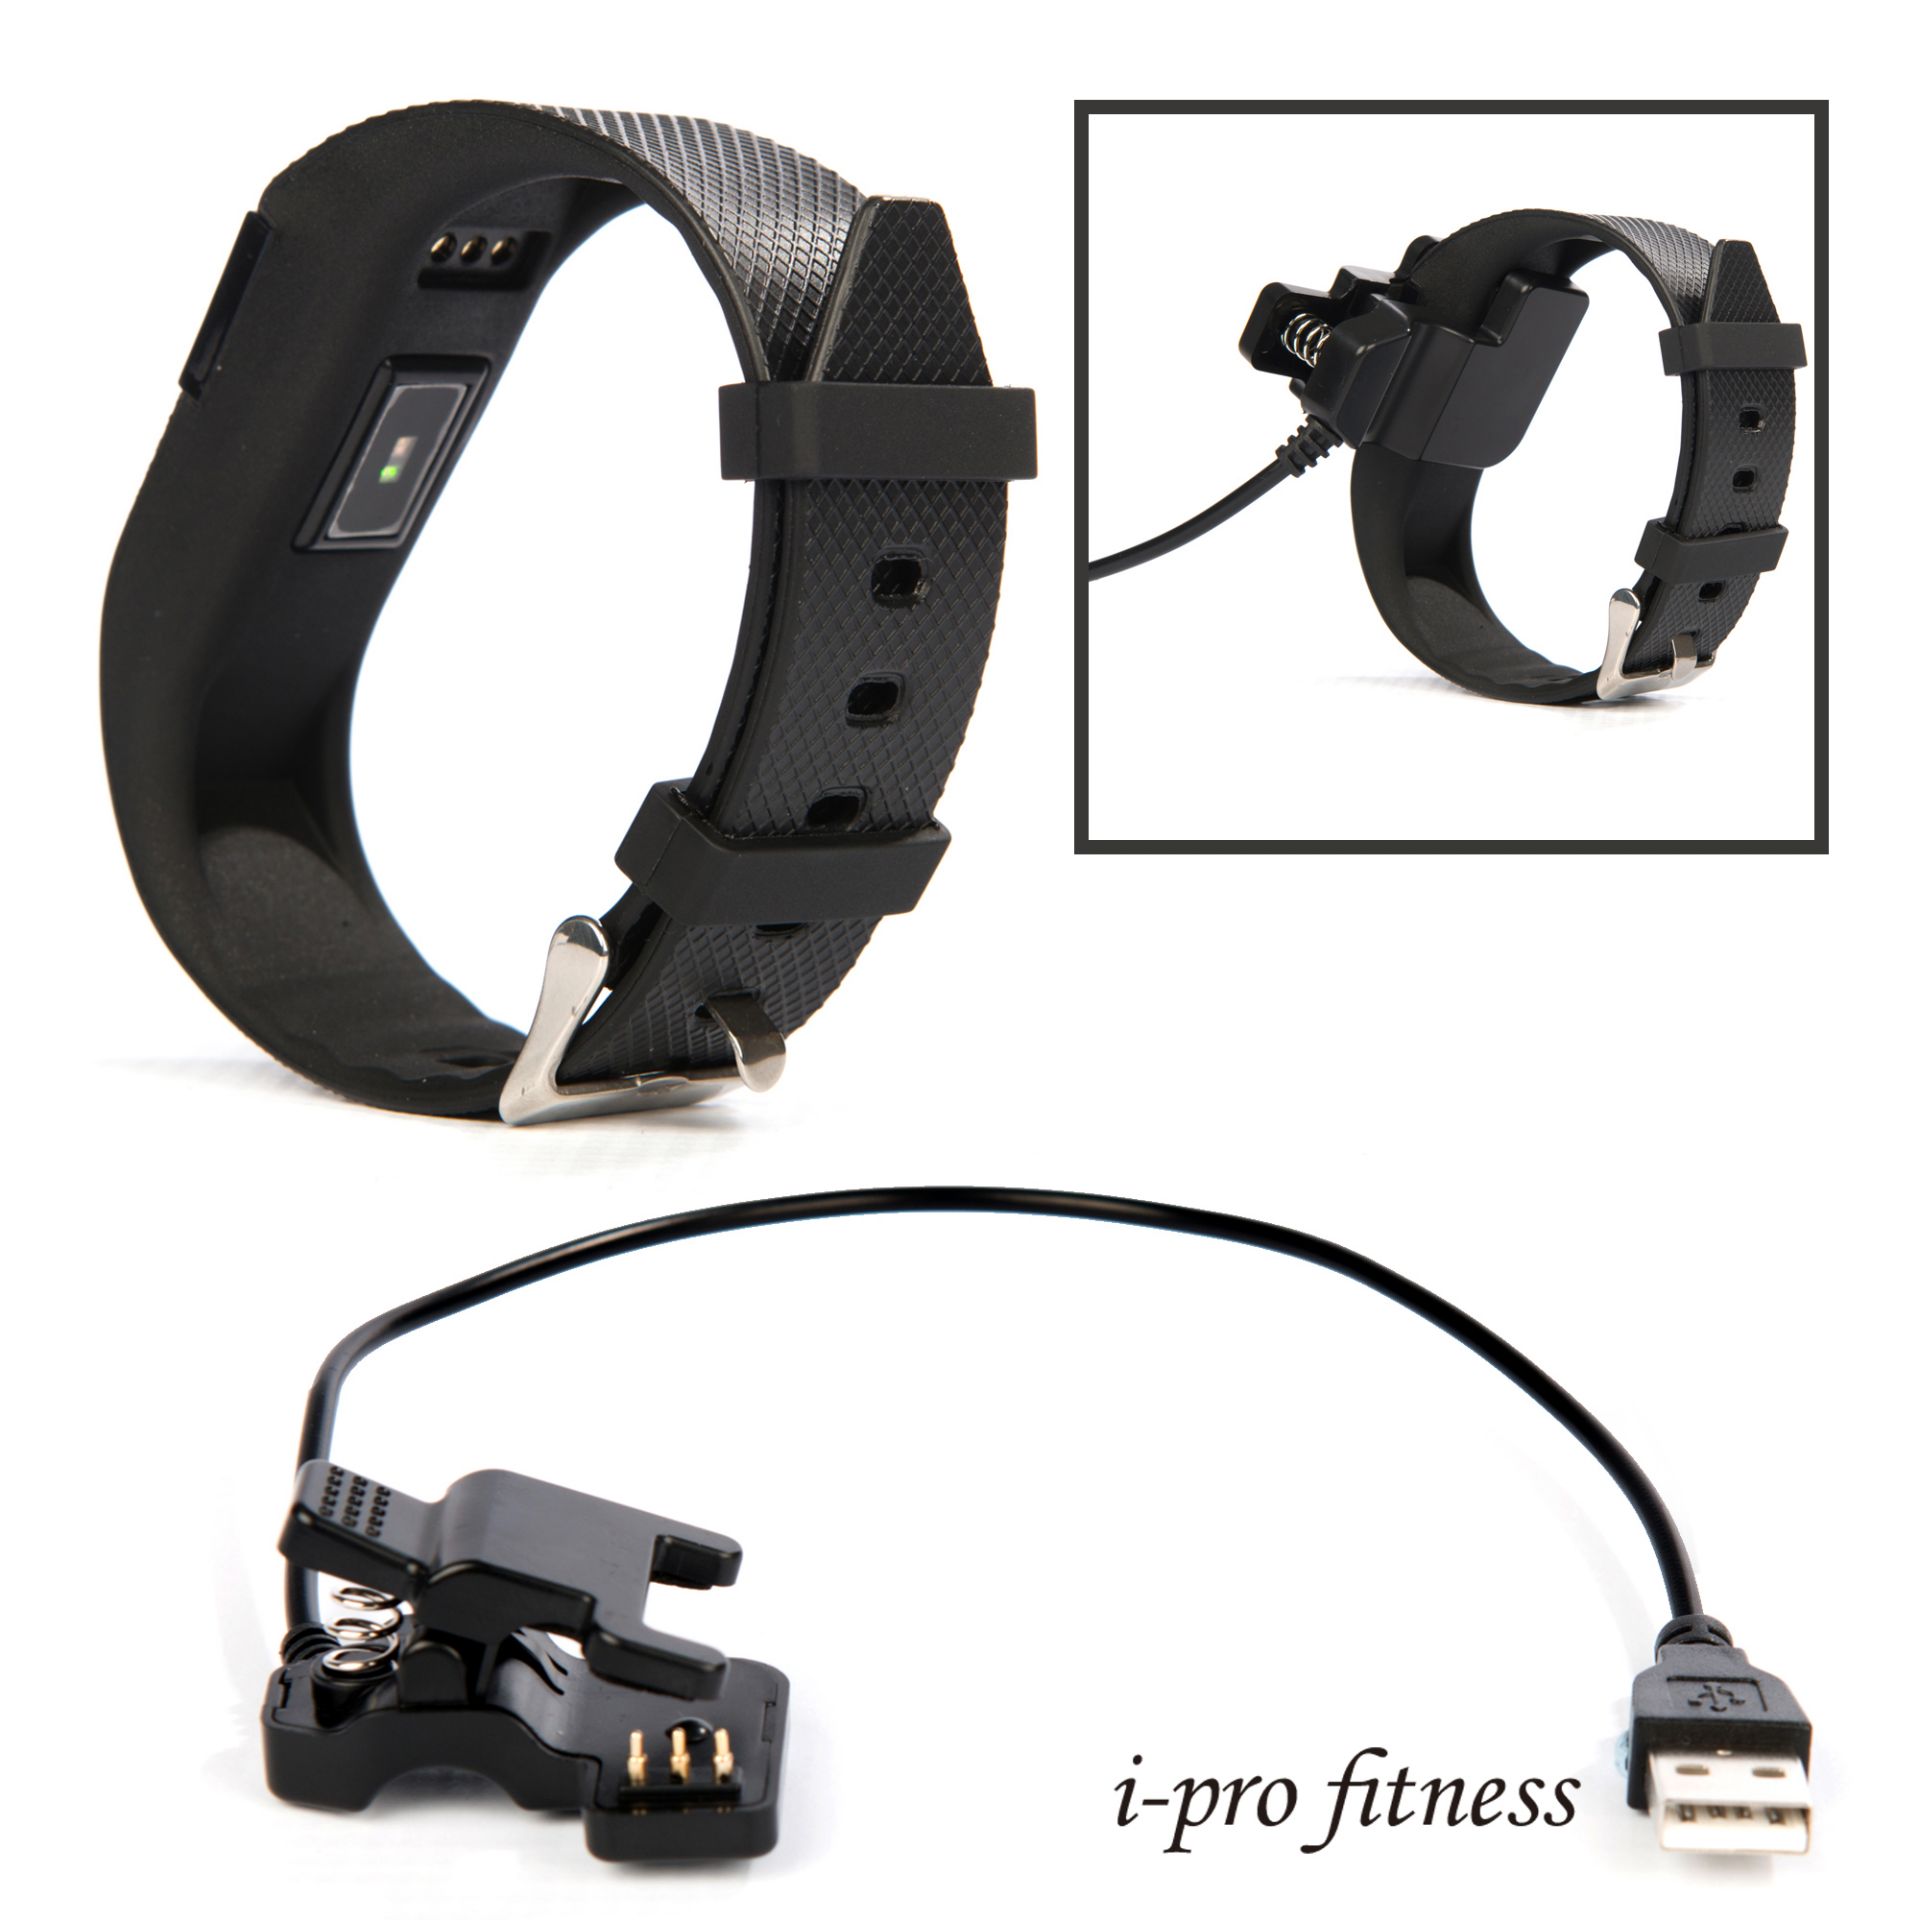 20x Fitness Tracker i-pro fitness, Bluetooth 4.0 Sports Smart Bracelet, Heart Rate Monitor - Image 6 of 8